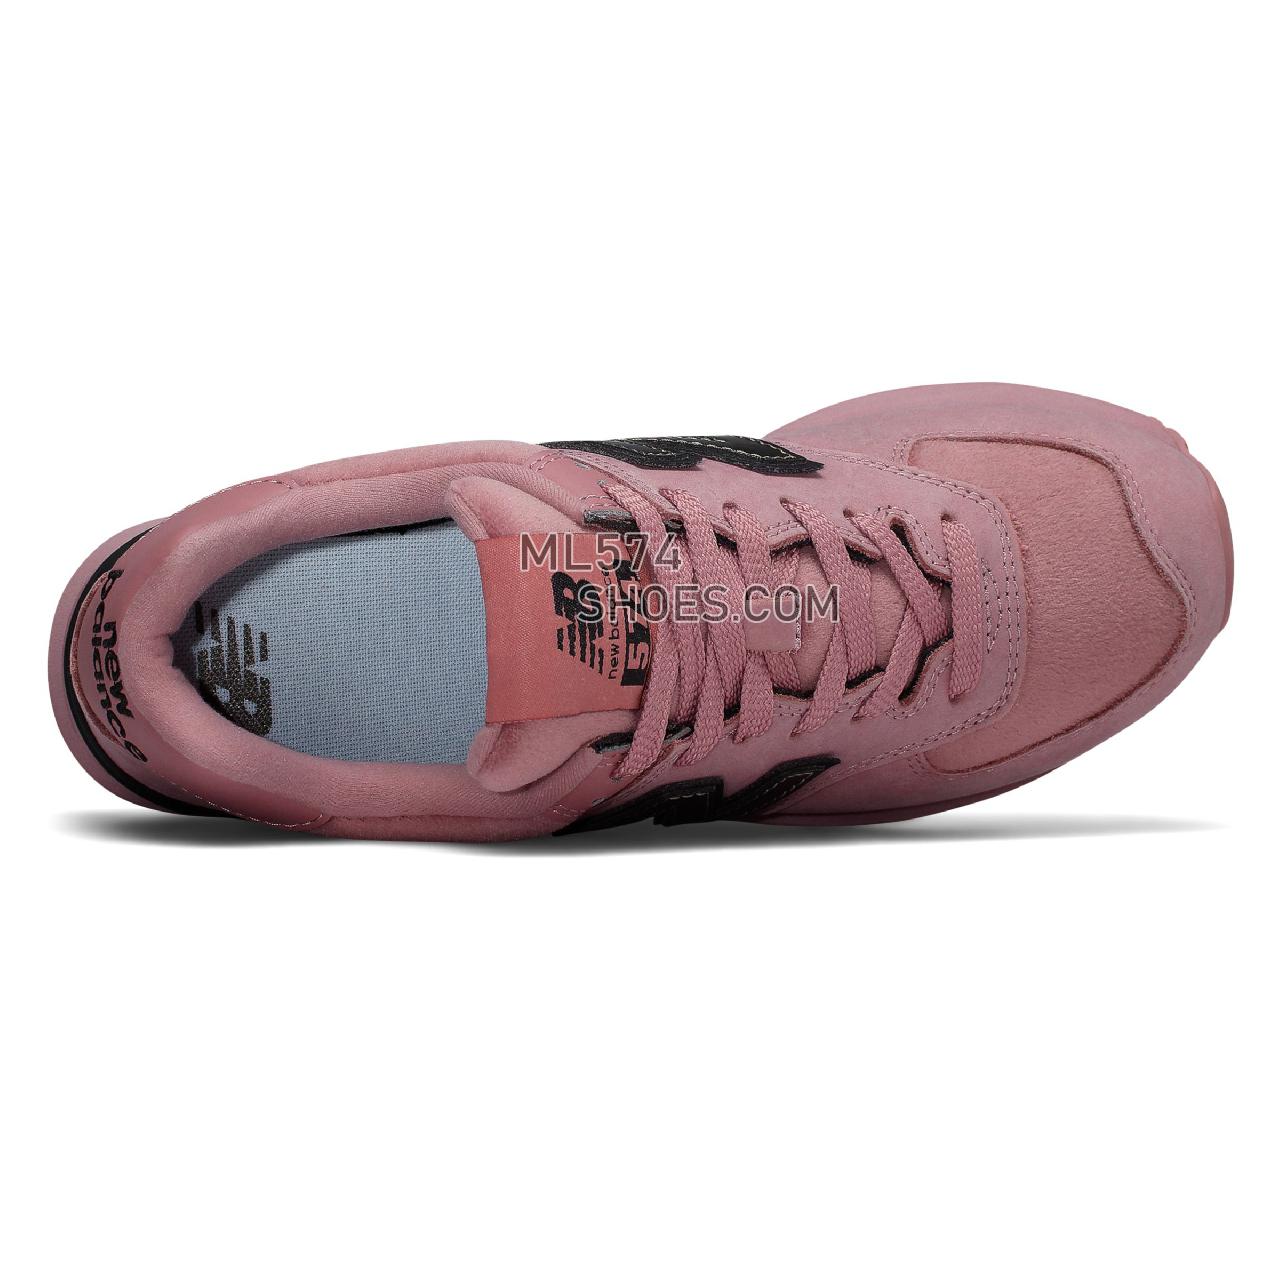 New Balance 574 - Women's Classic Sneakers - Twilight Rose with Black - WL574LDJ